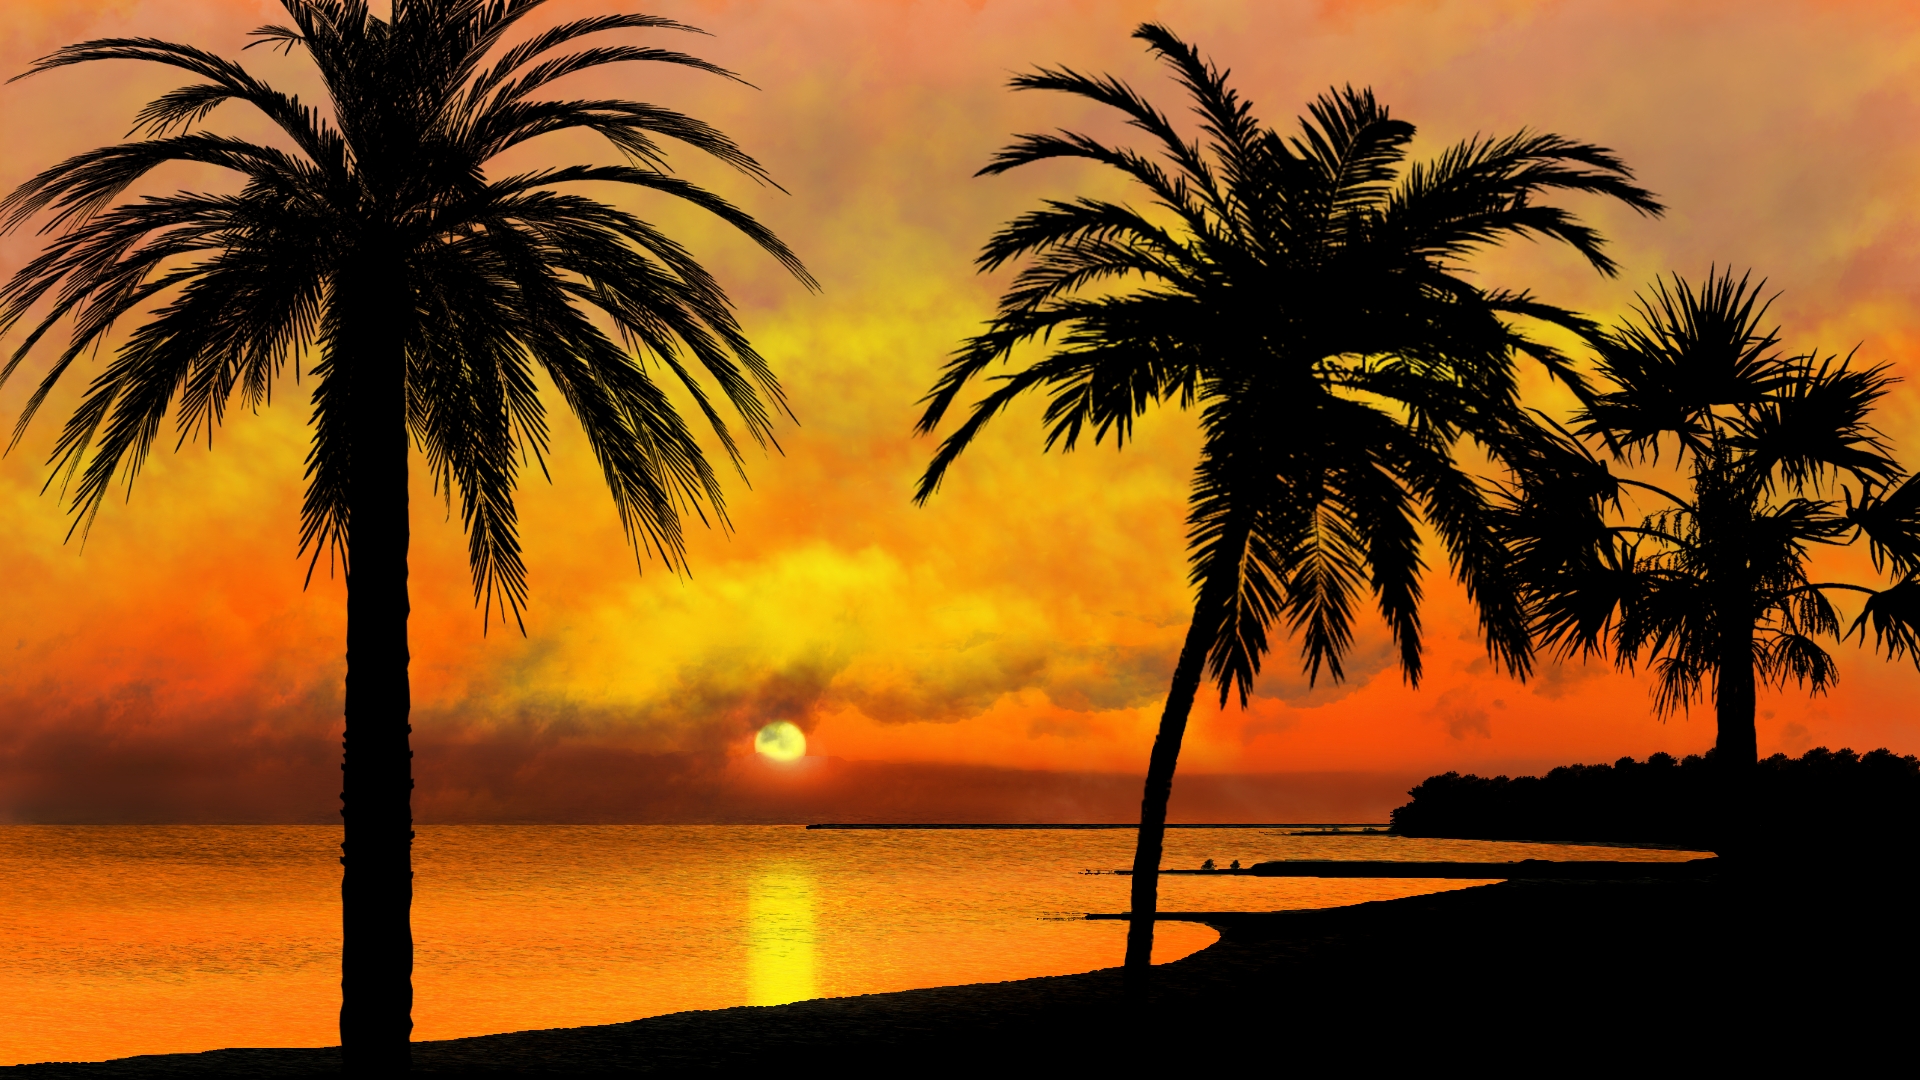 General 1920x1080 digital art nature landscape beach tropical sunset sunset glow palm trees sky clouds Sun water silhouette